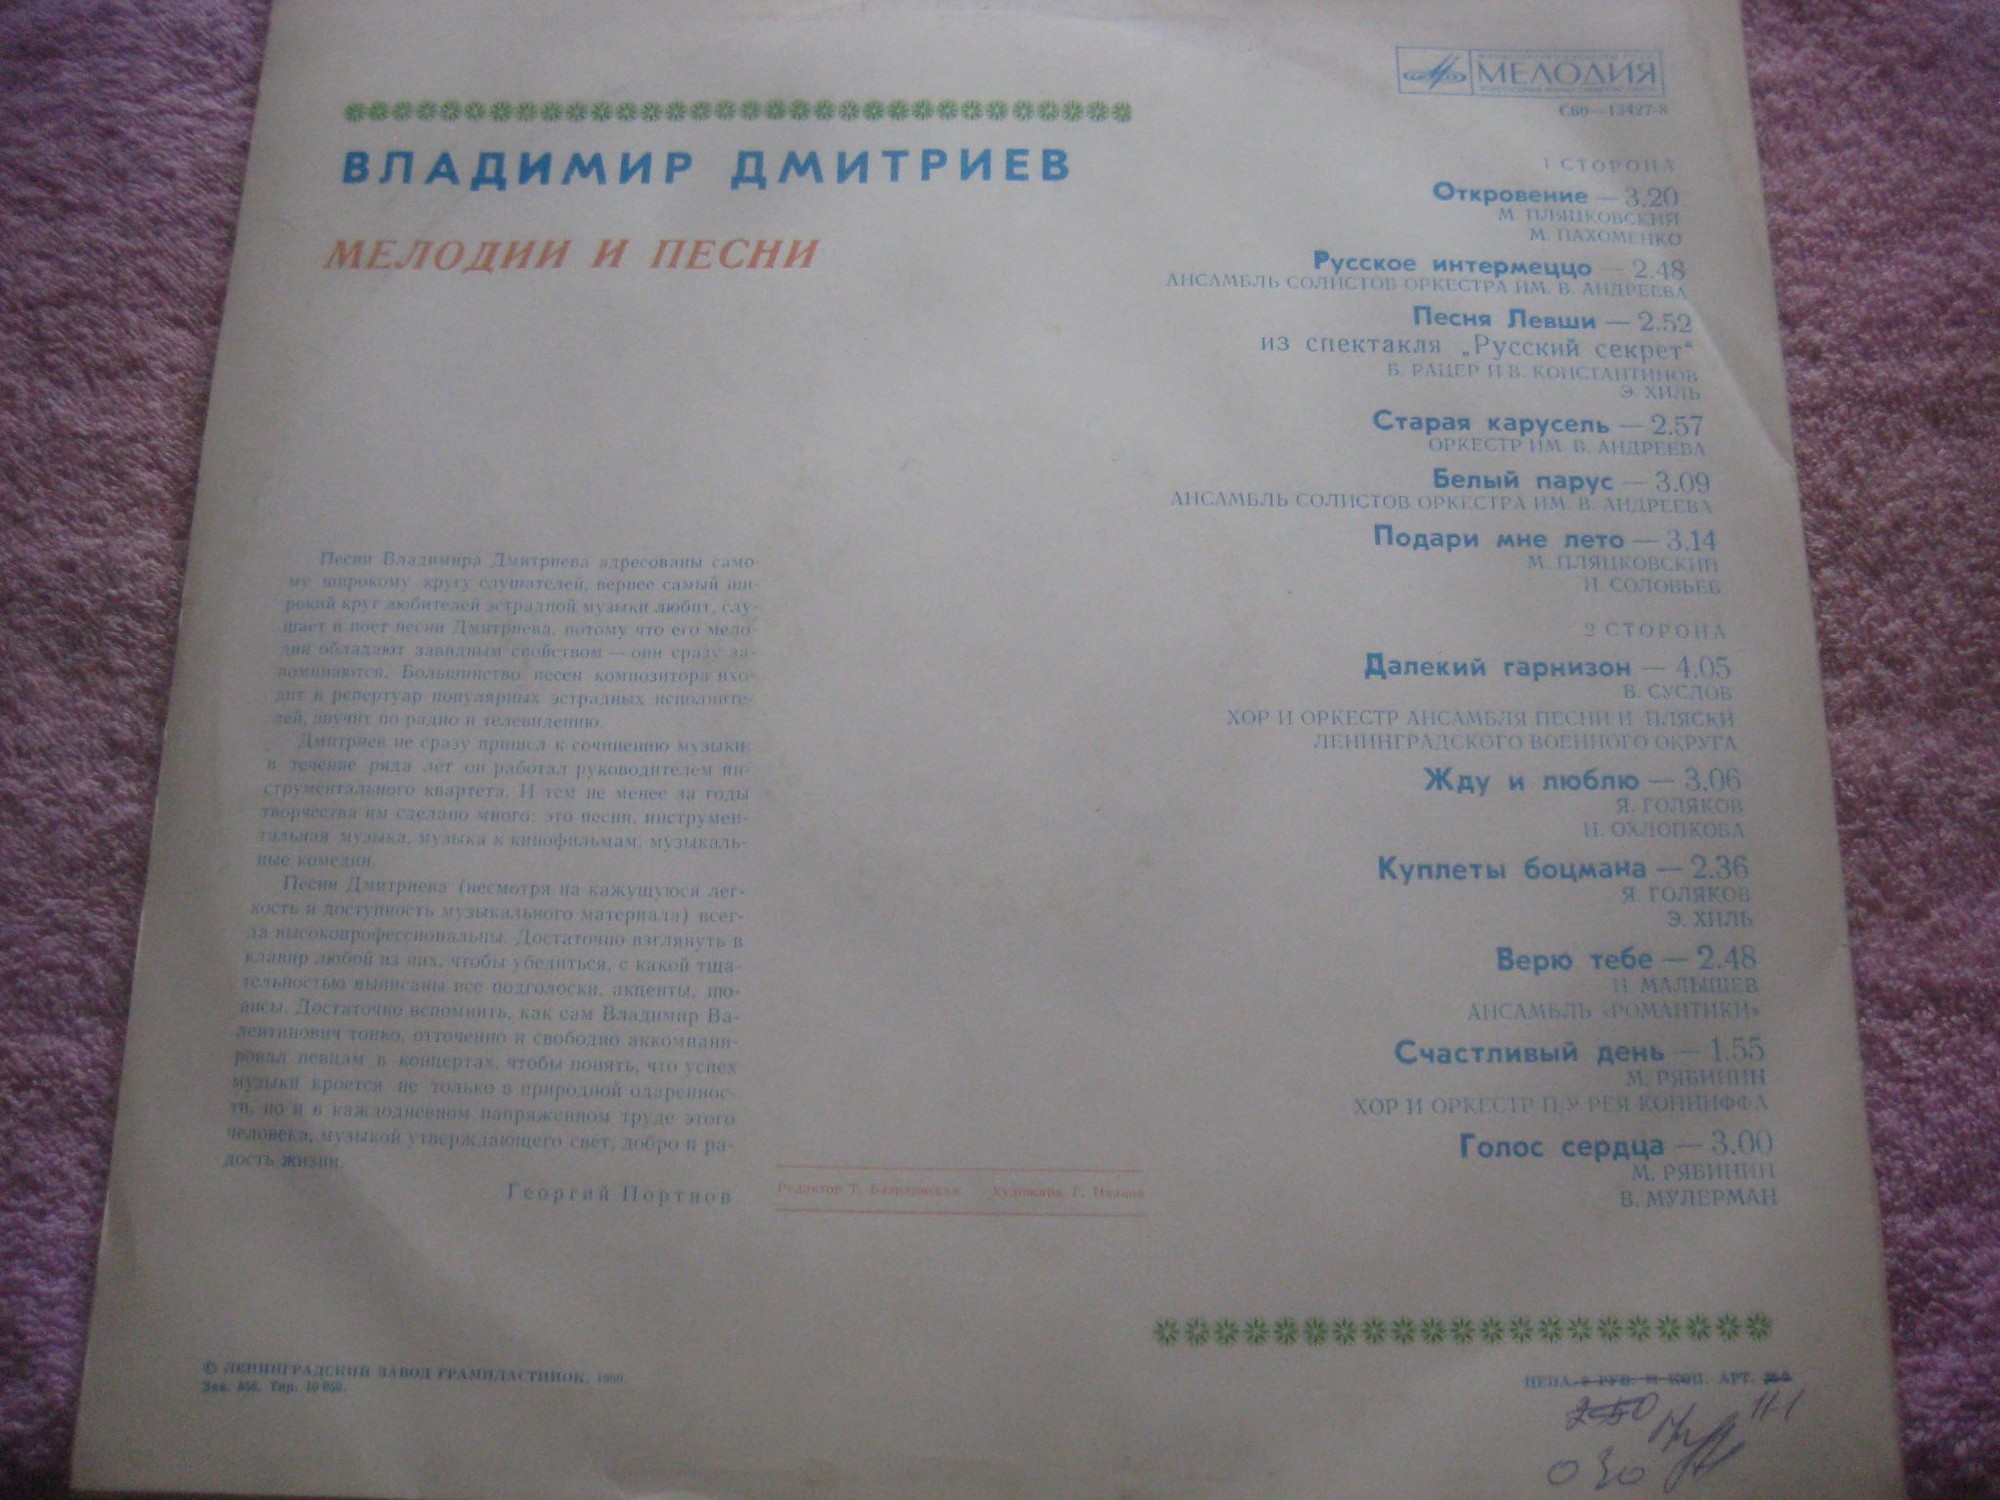 ВЛАДИМИР ДМИТРИЕВ (1923—1979). МЕЛОДИИ И ПЕСНИ